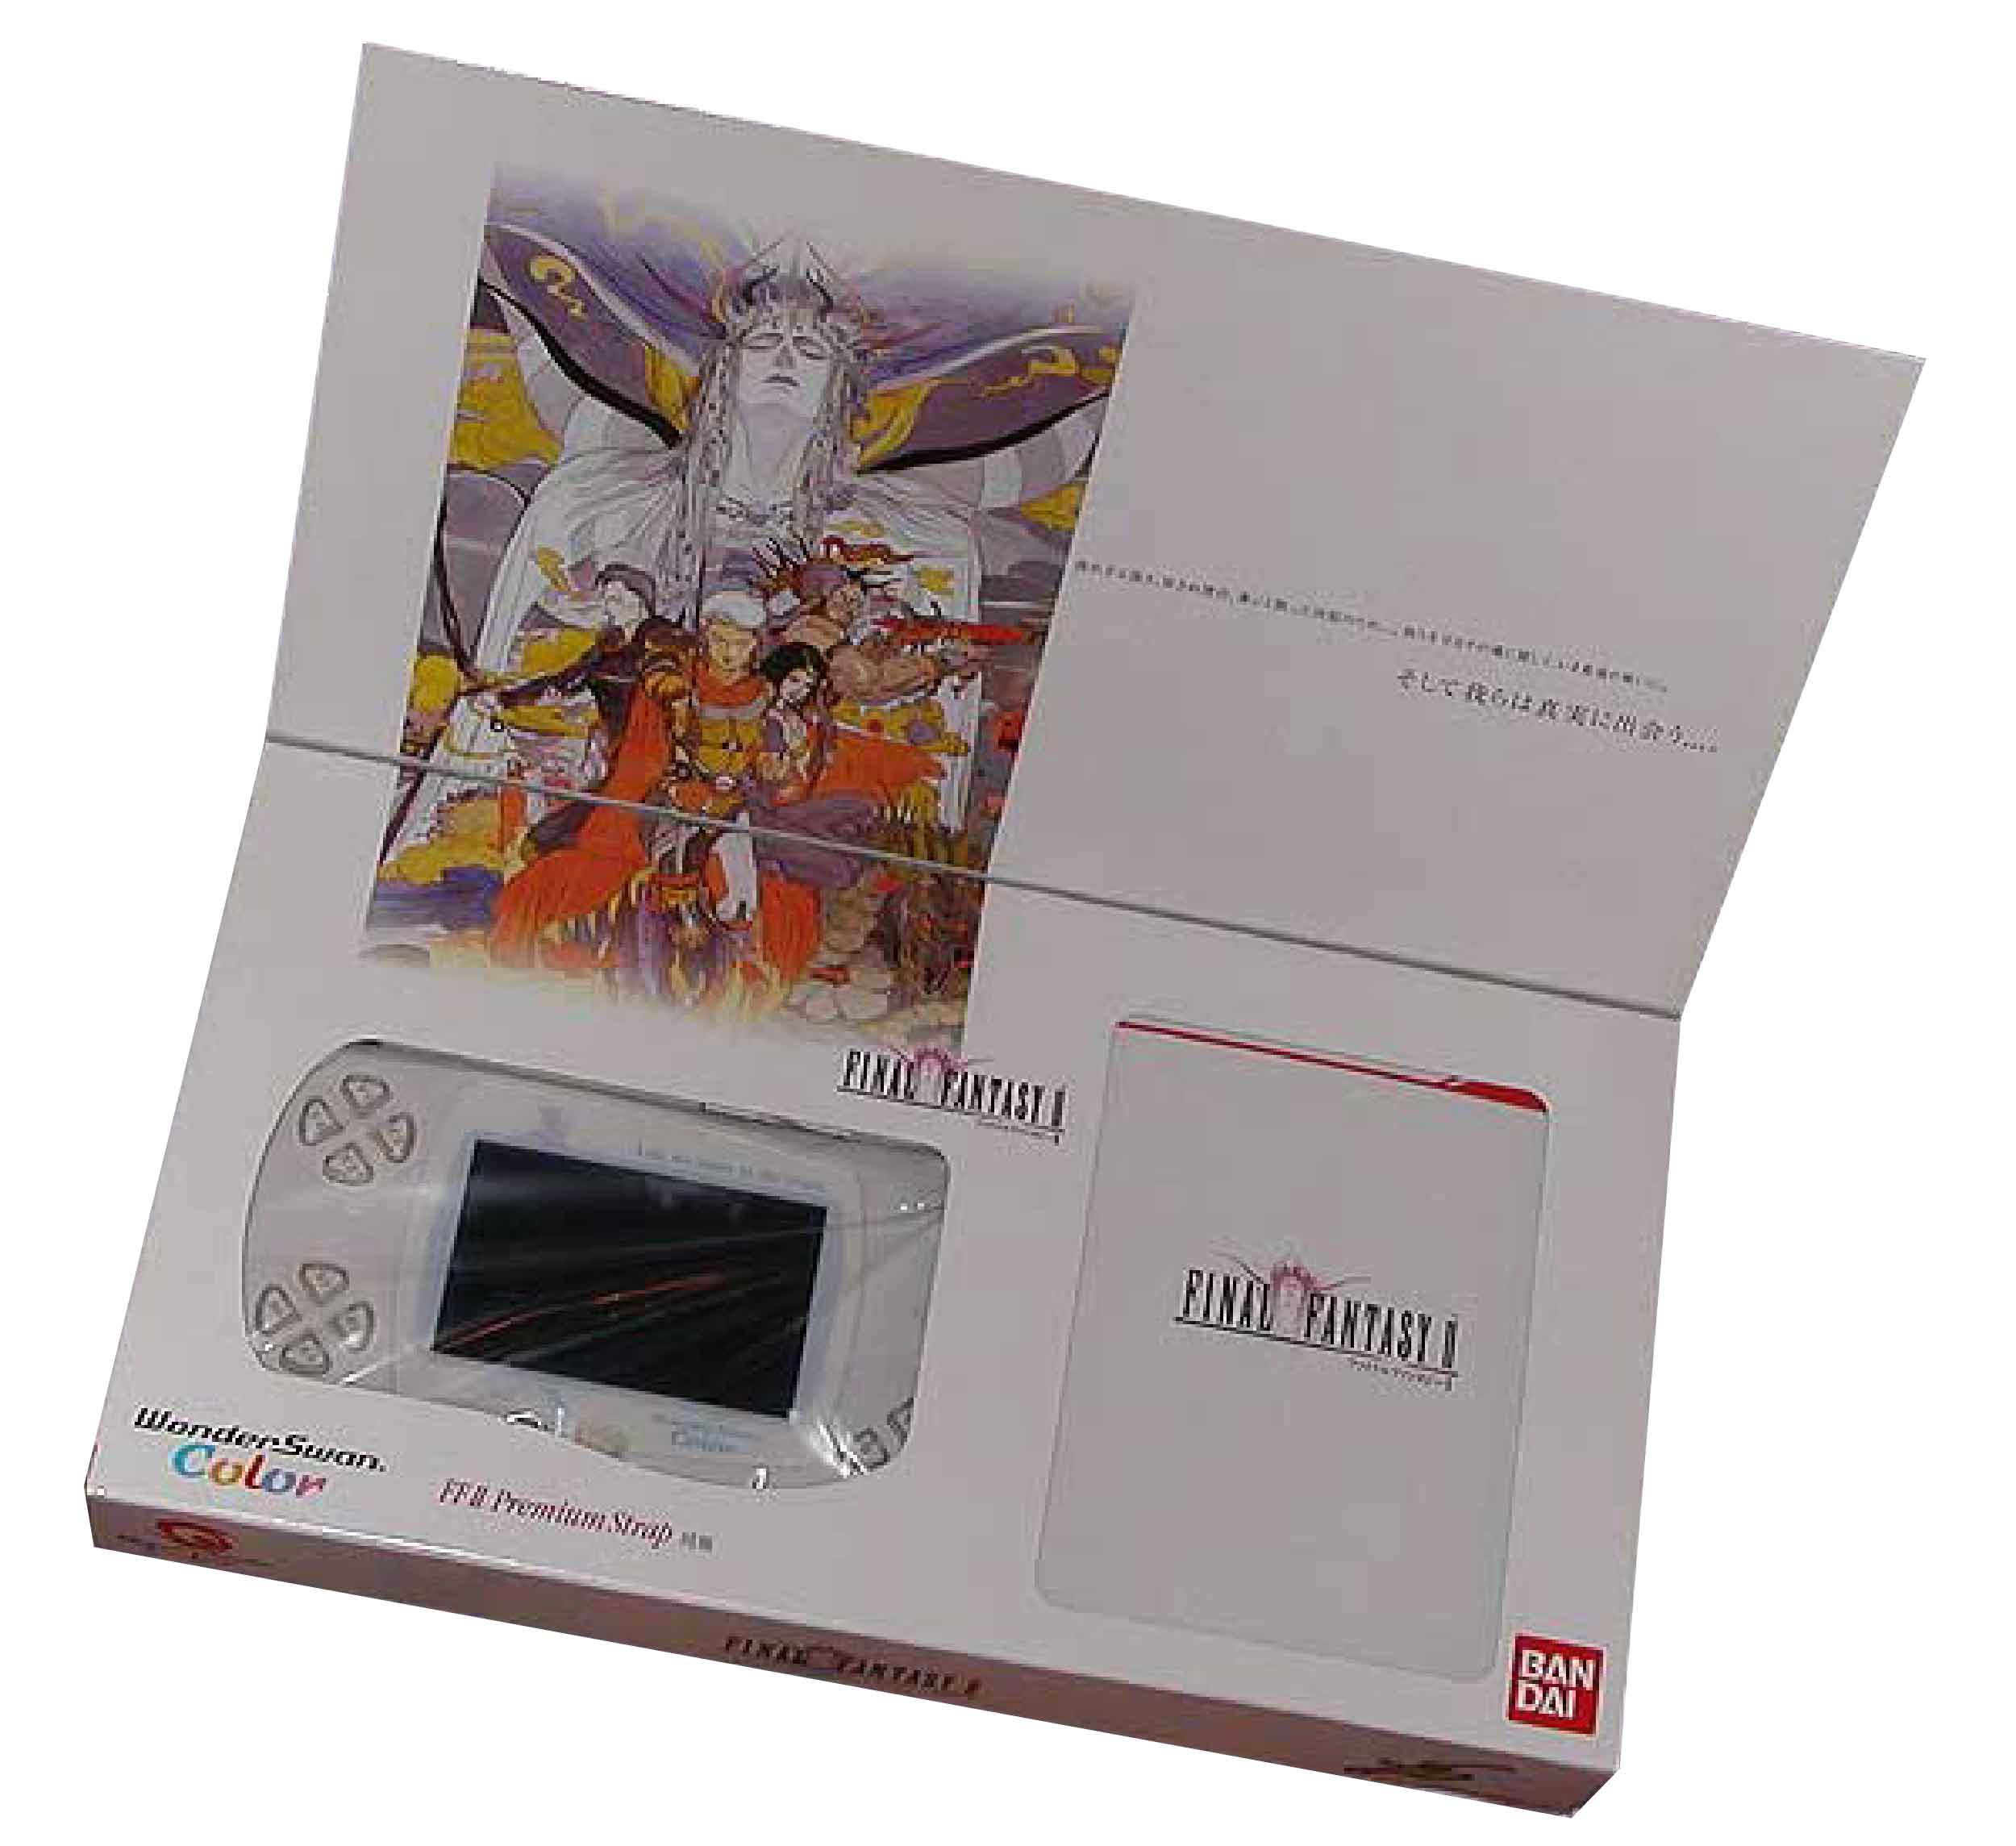 Bandai Wonderswan Color Final Fantasy II Color Final Fantasy I  Retropixl Retrogaming retro gaming Rare Console Collector Limited Edition Japan Import